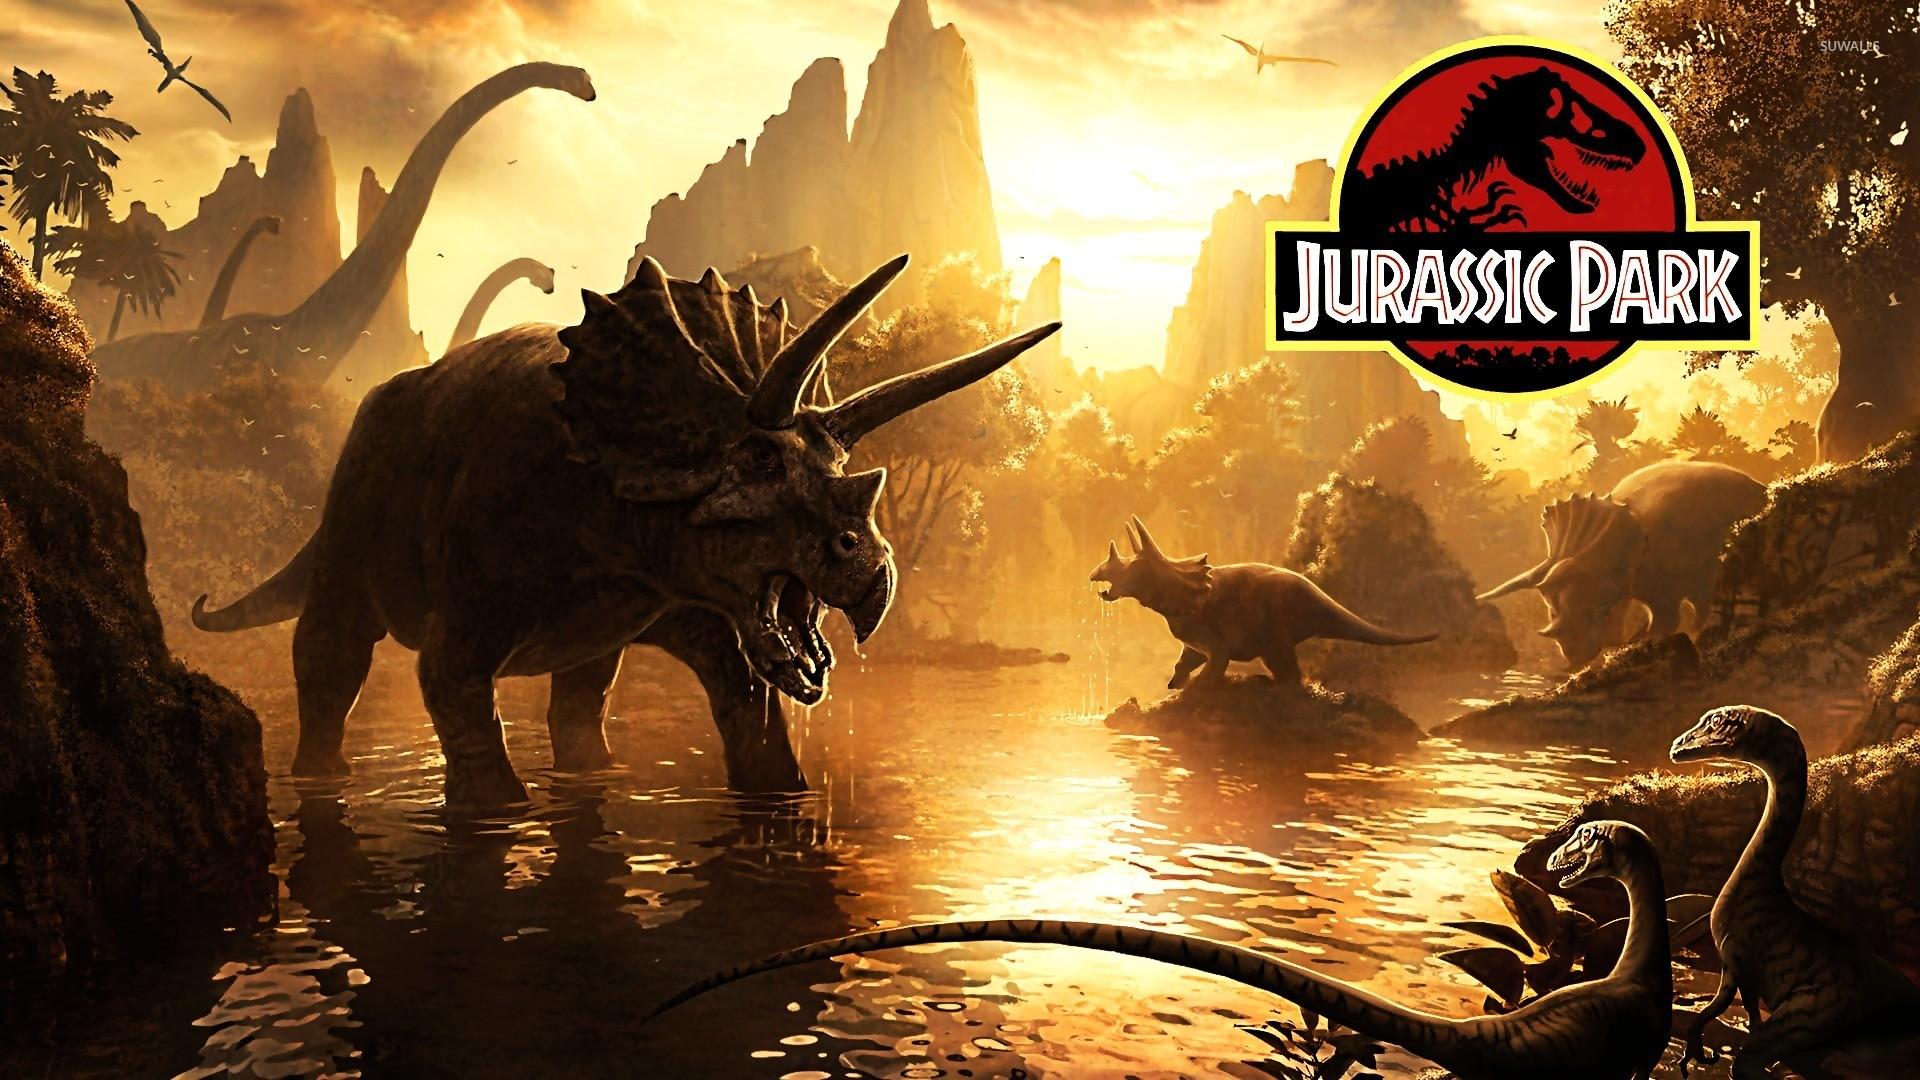 Jurassic Park Wallpaper background picture